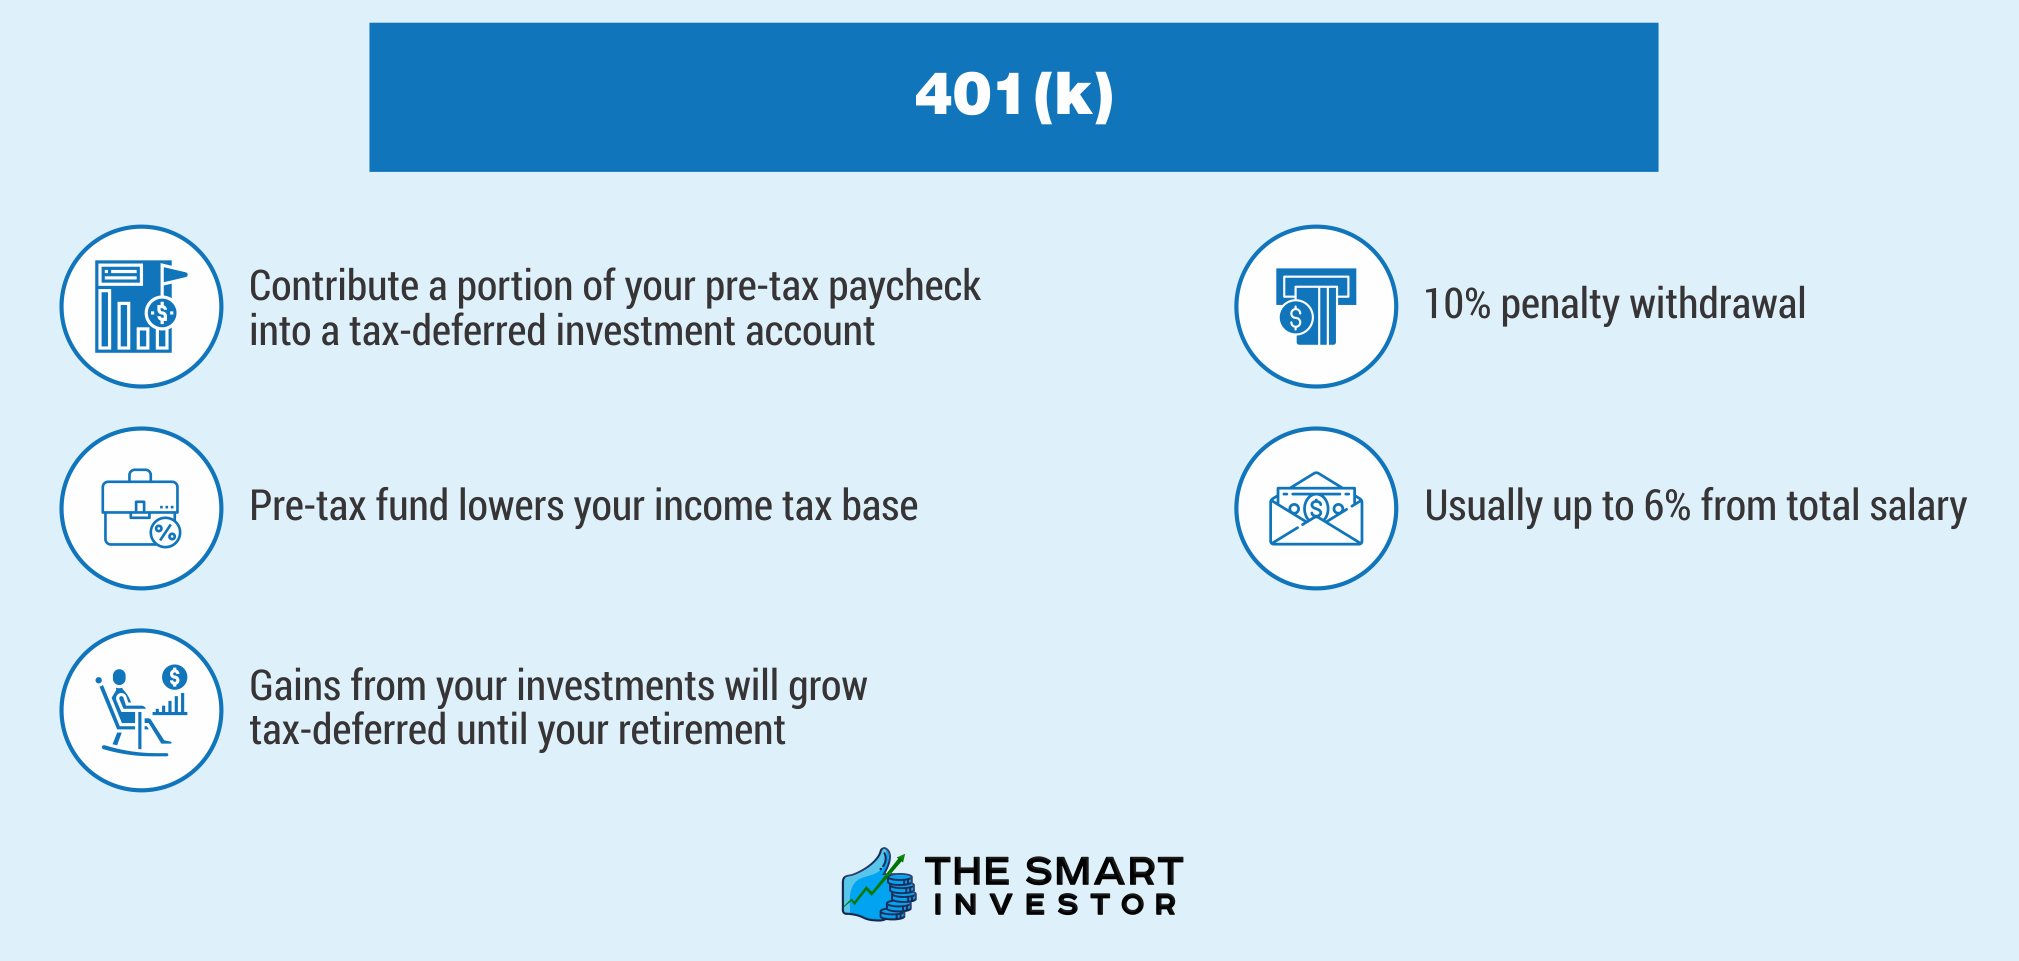 How 401(k) worls